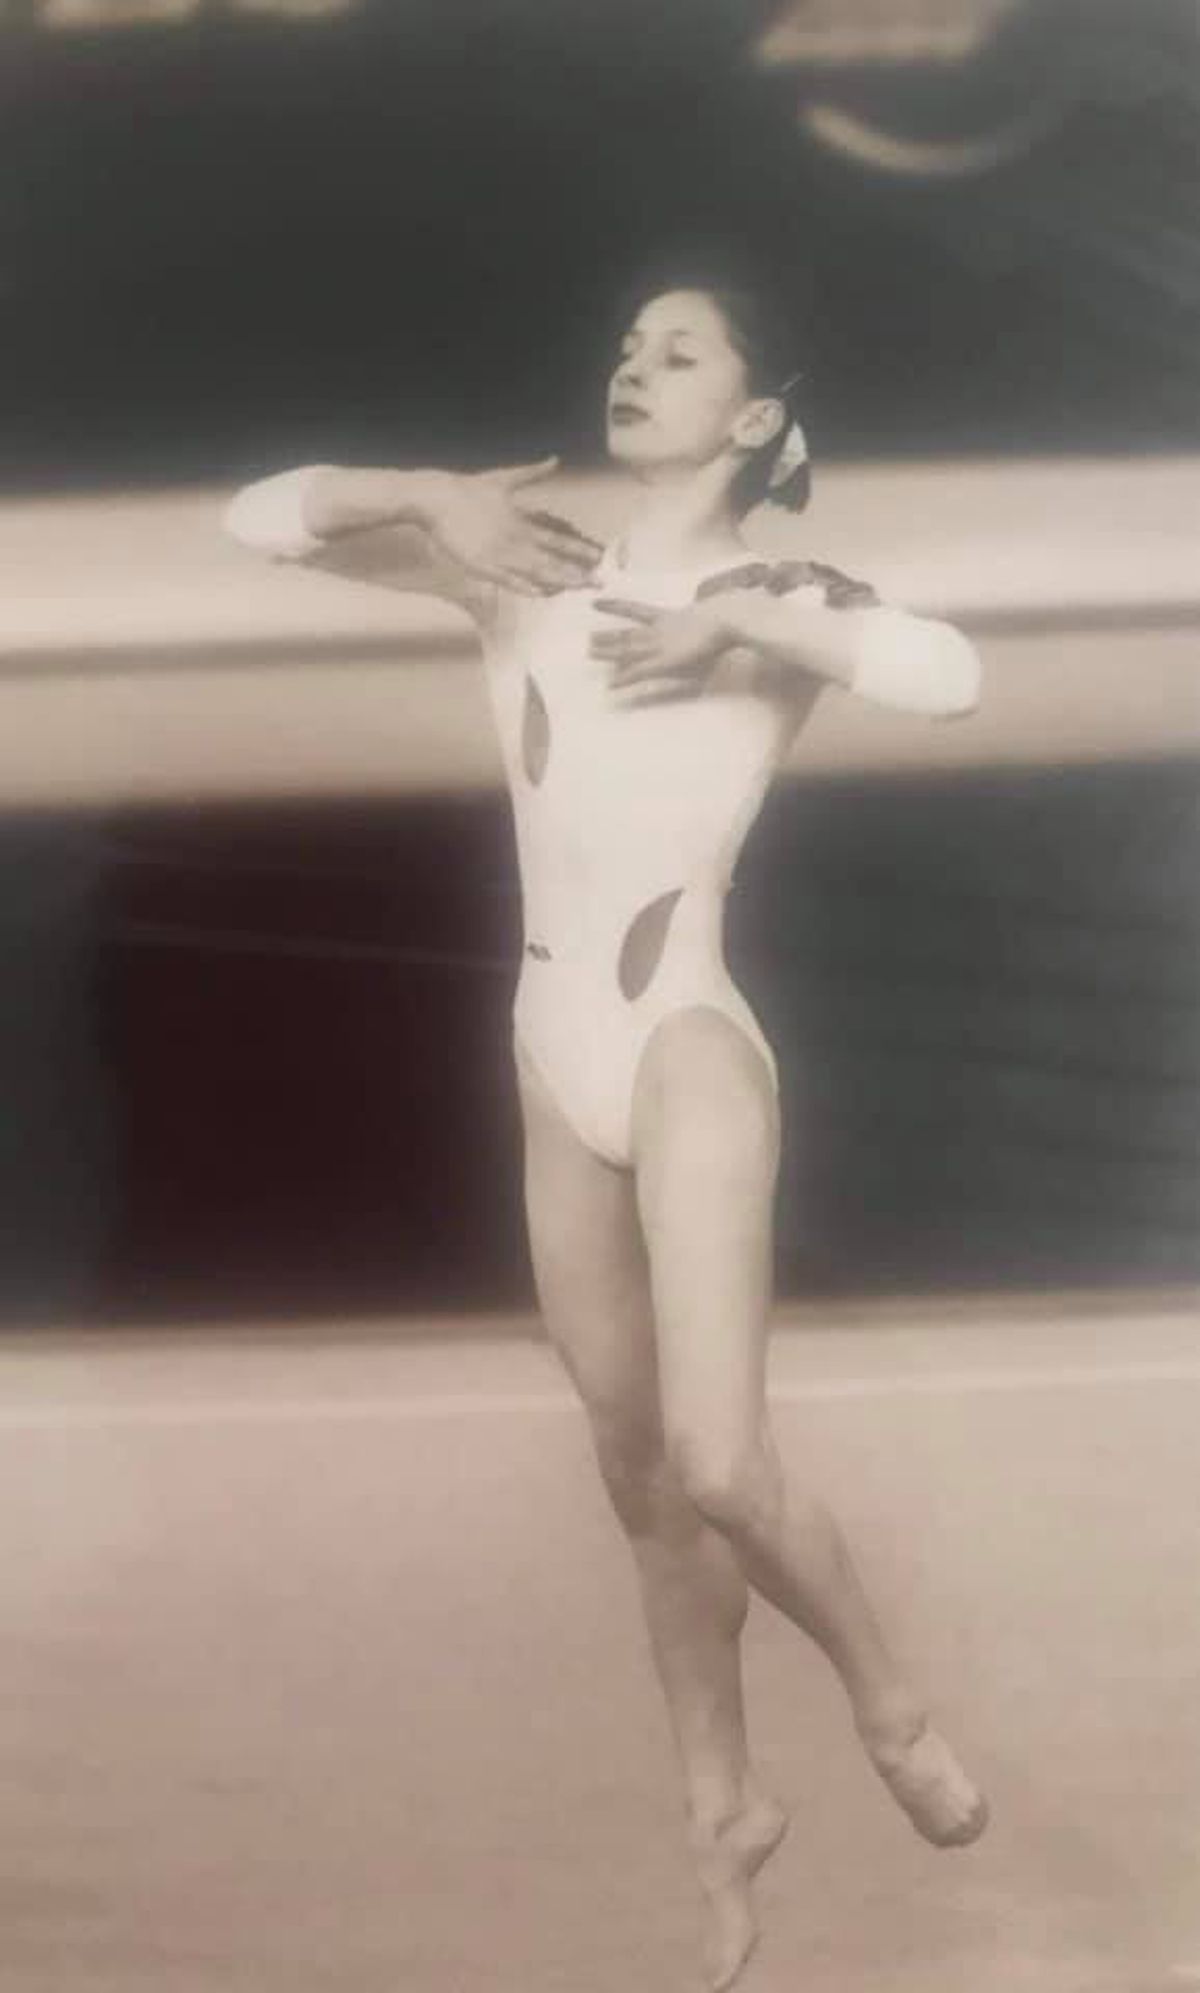 Maria Olaru - gimnastica